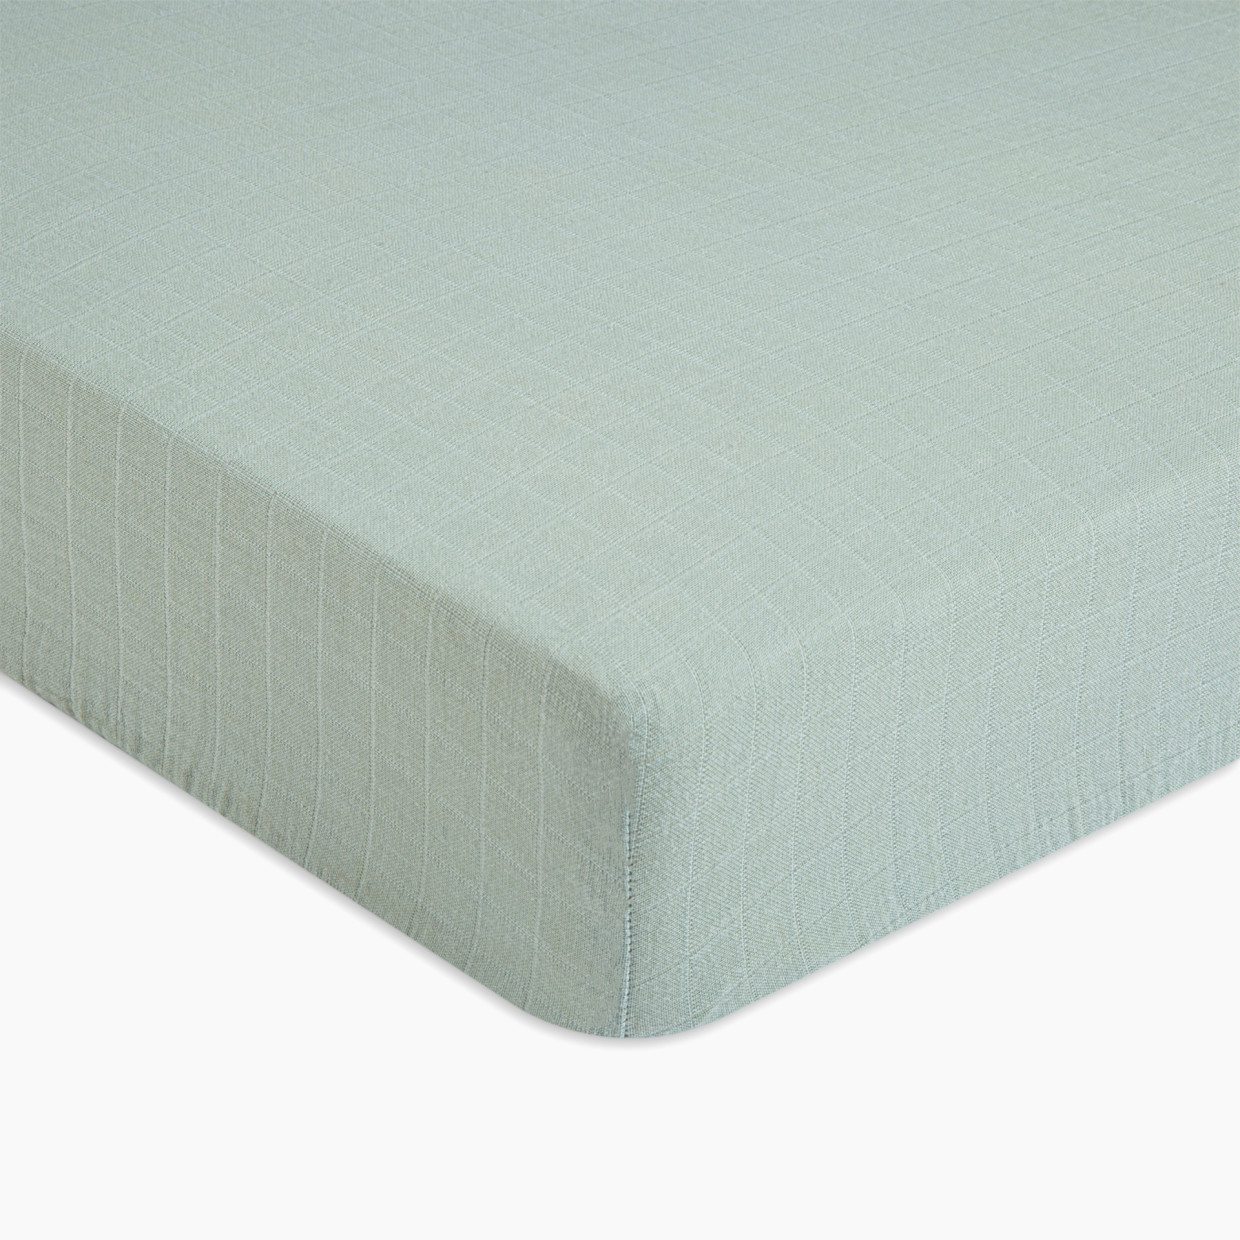 Crane Baby Cotton Muslin Crib Fitted Sheet - Evergreen.